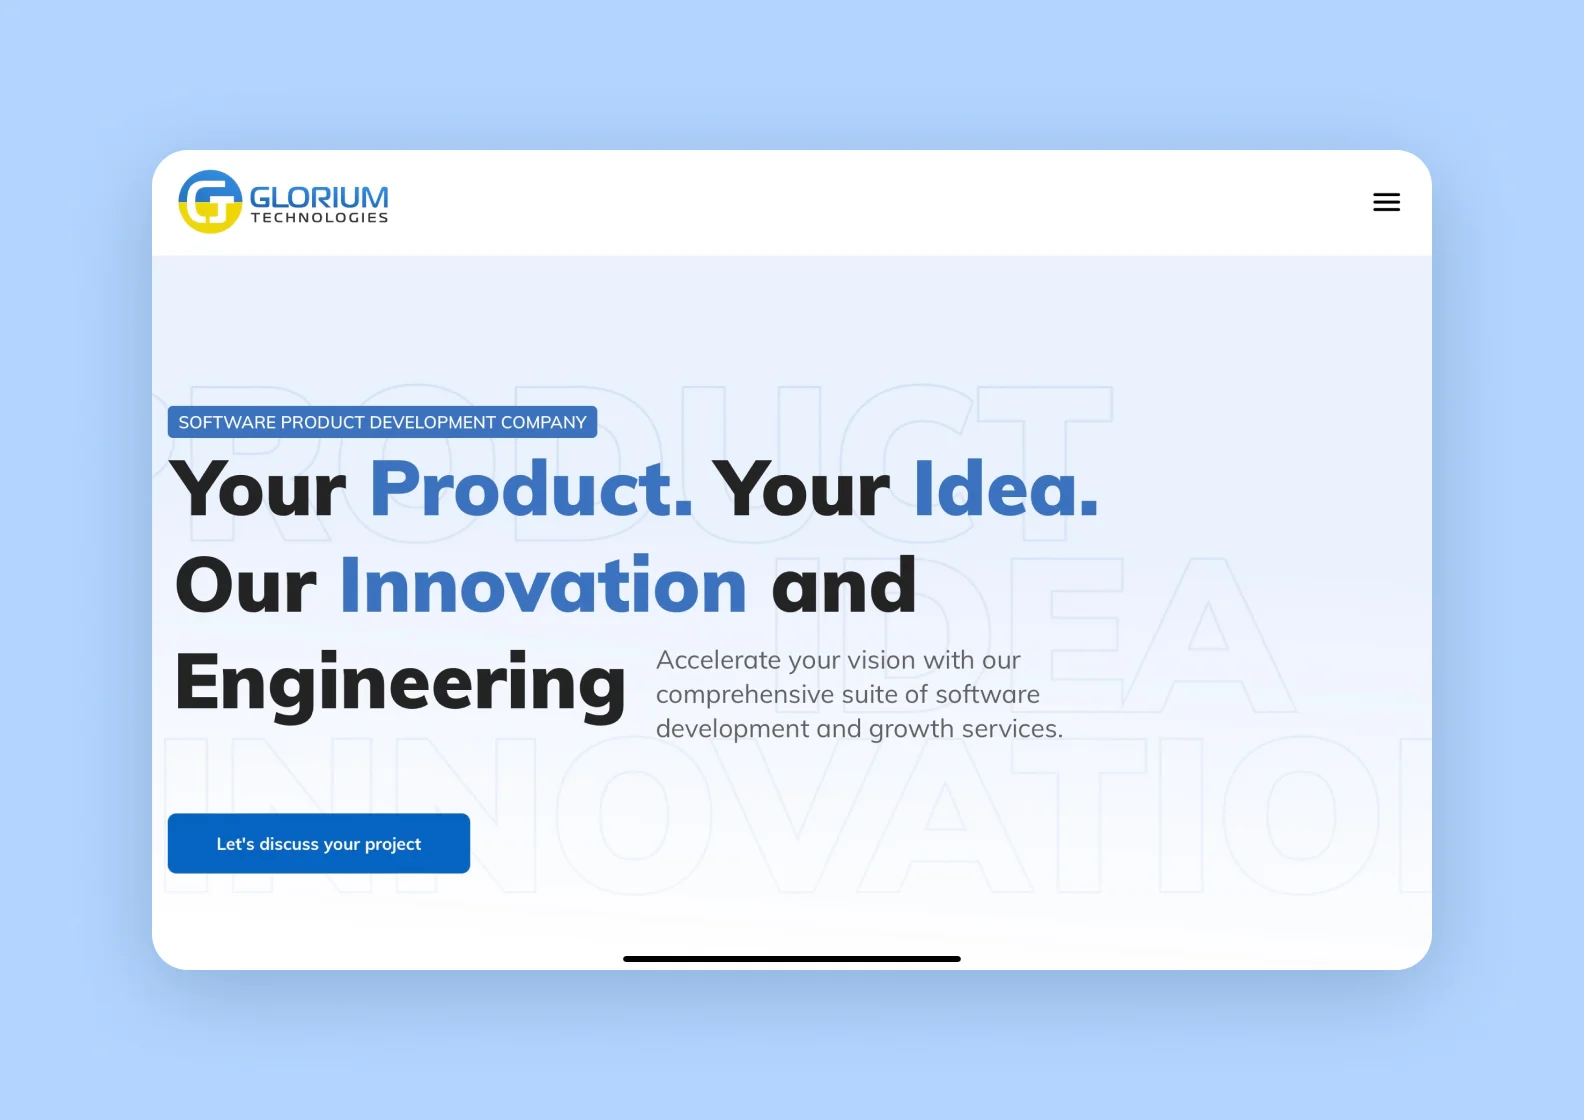 Glorium Technologies software outsourcing company